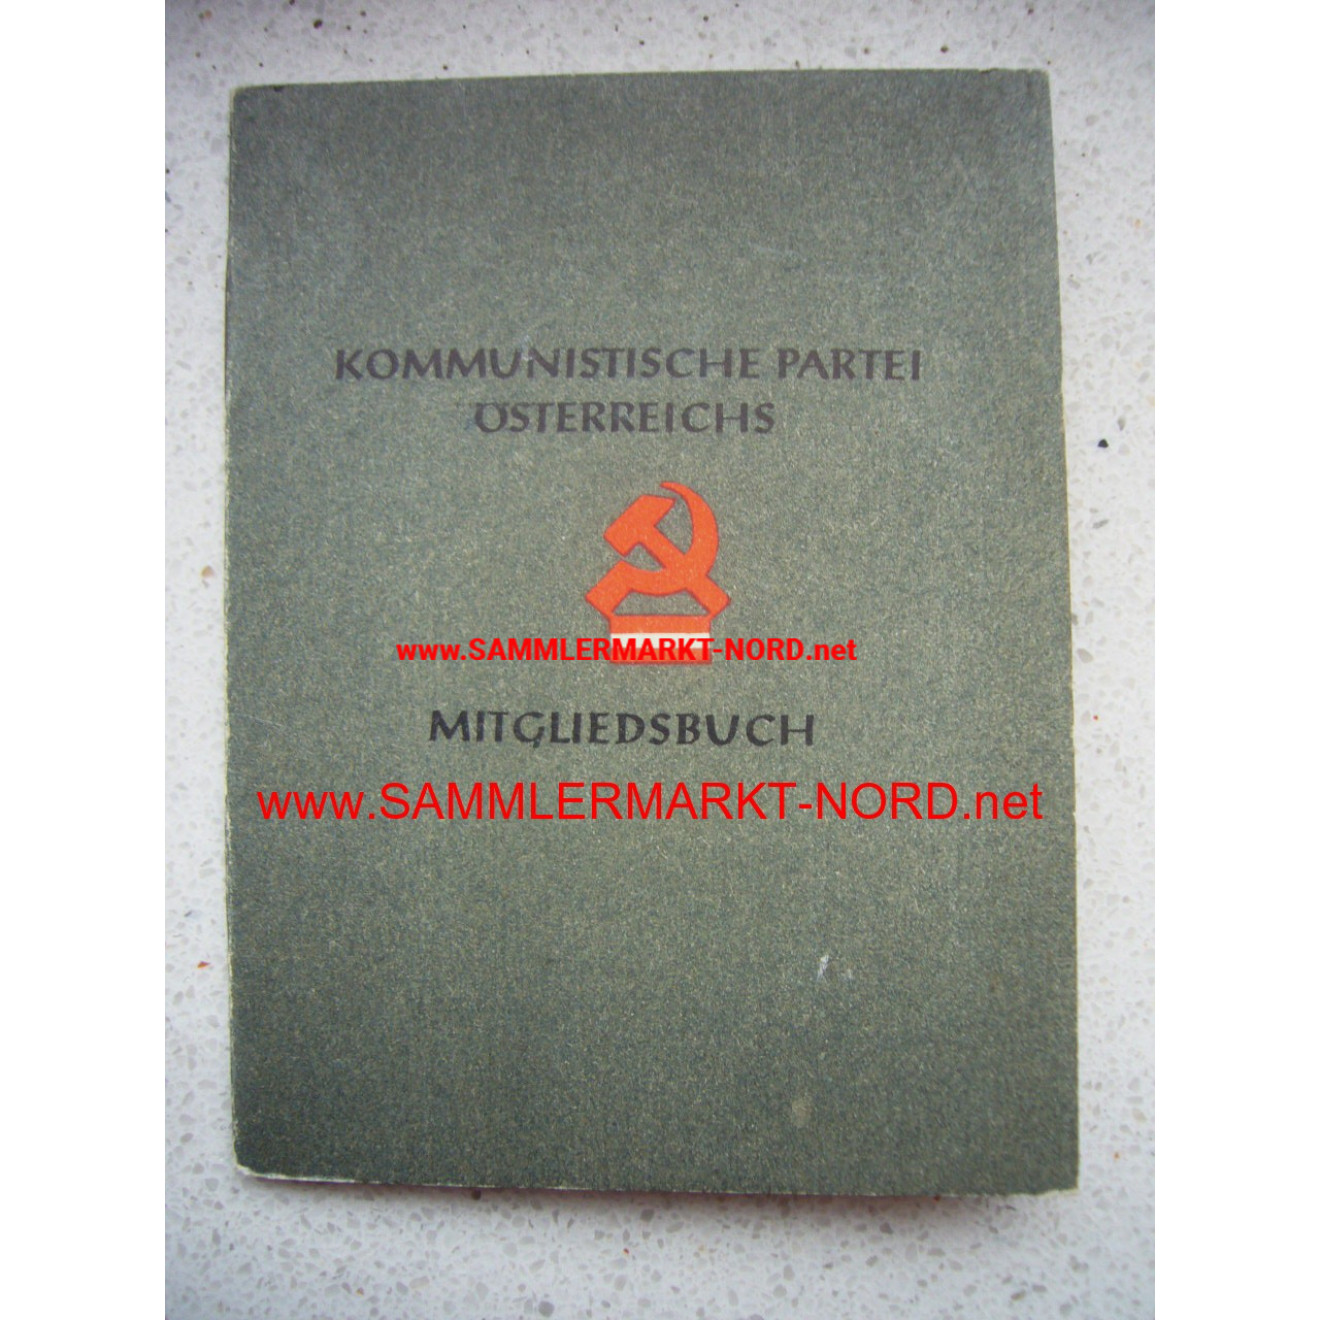 KPÖ Communist Party of Austria - Membership Book